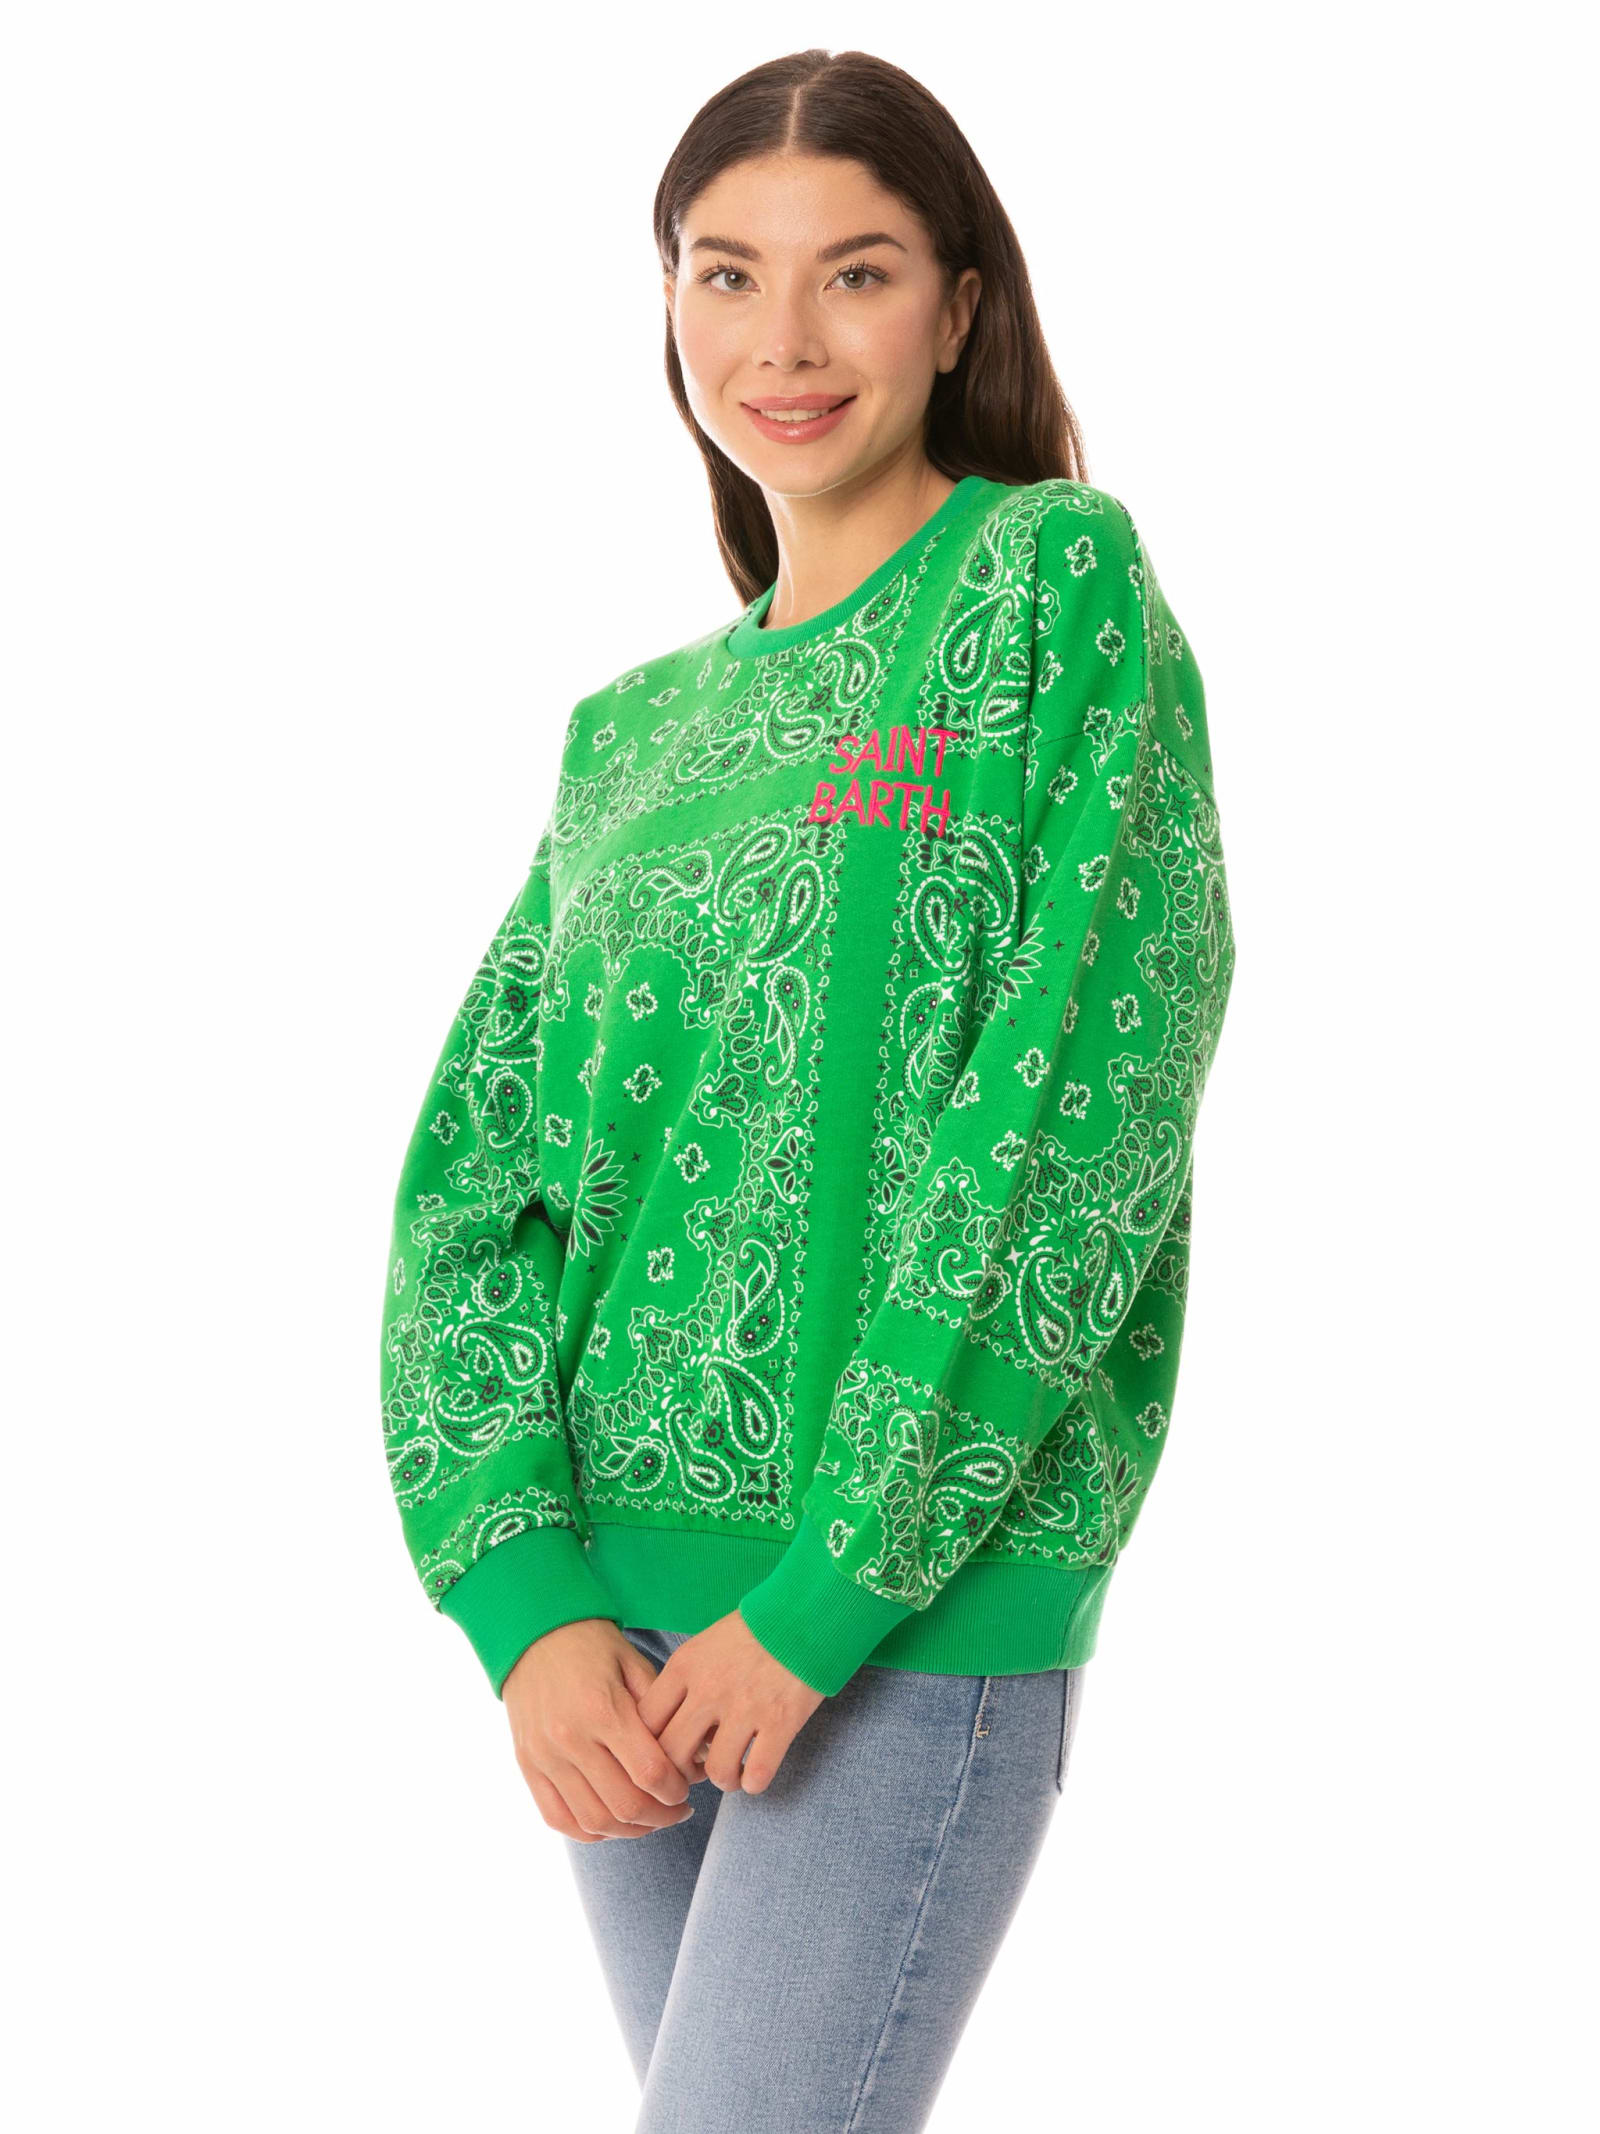 Woman Sweatshirt With Bandanna Print